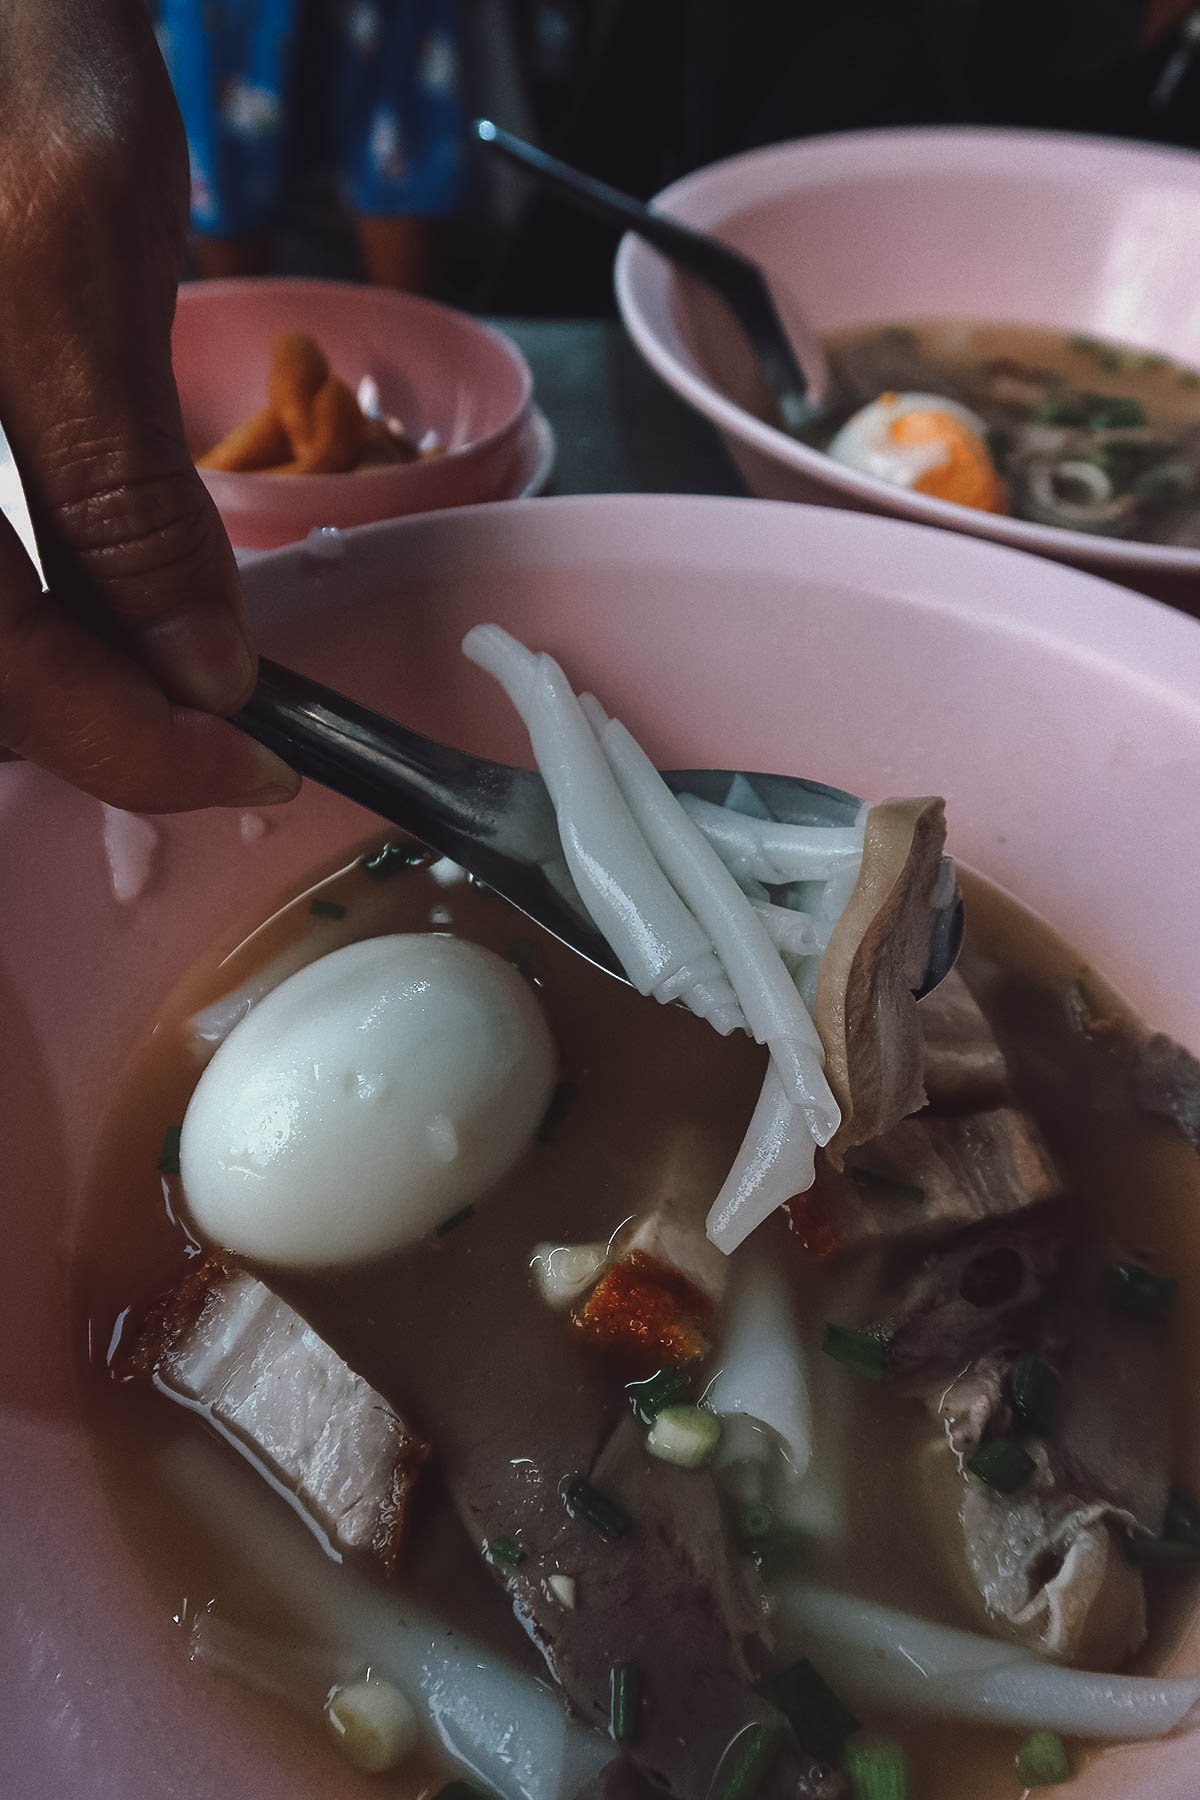 Kway chap noodles in Bangkok